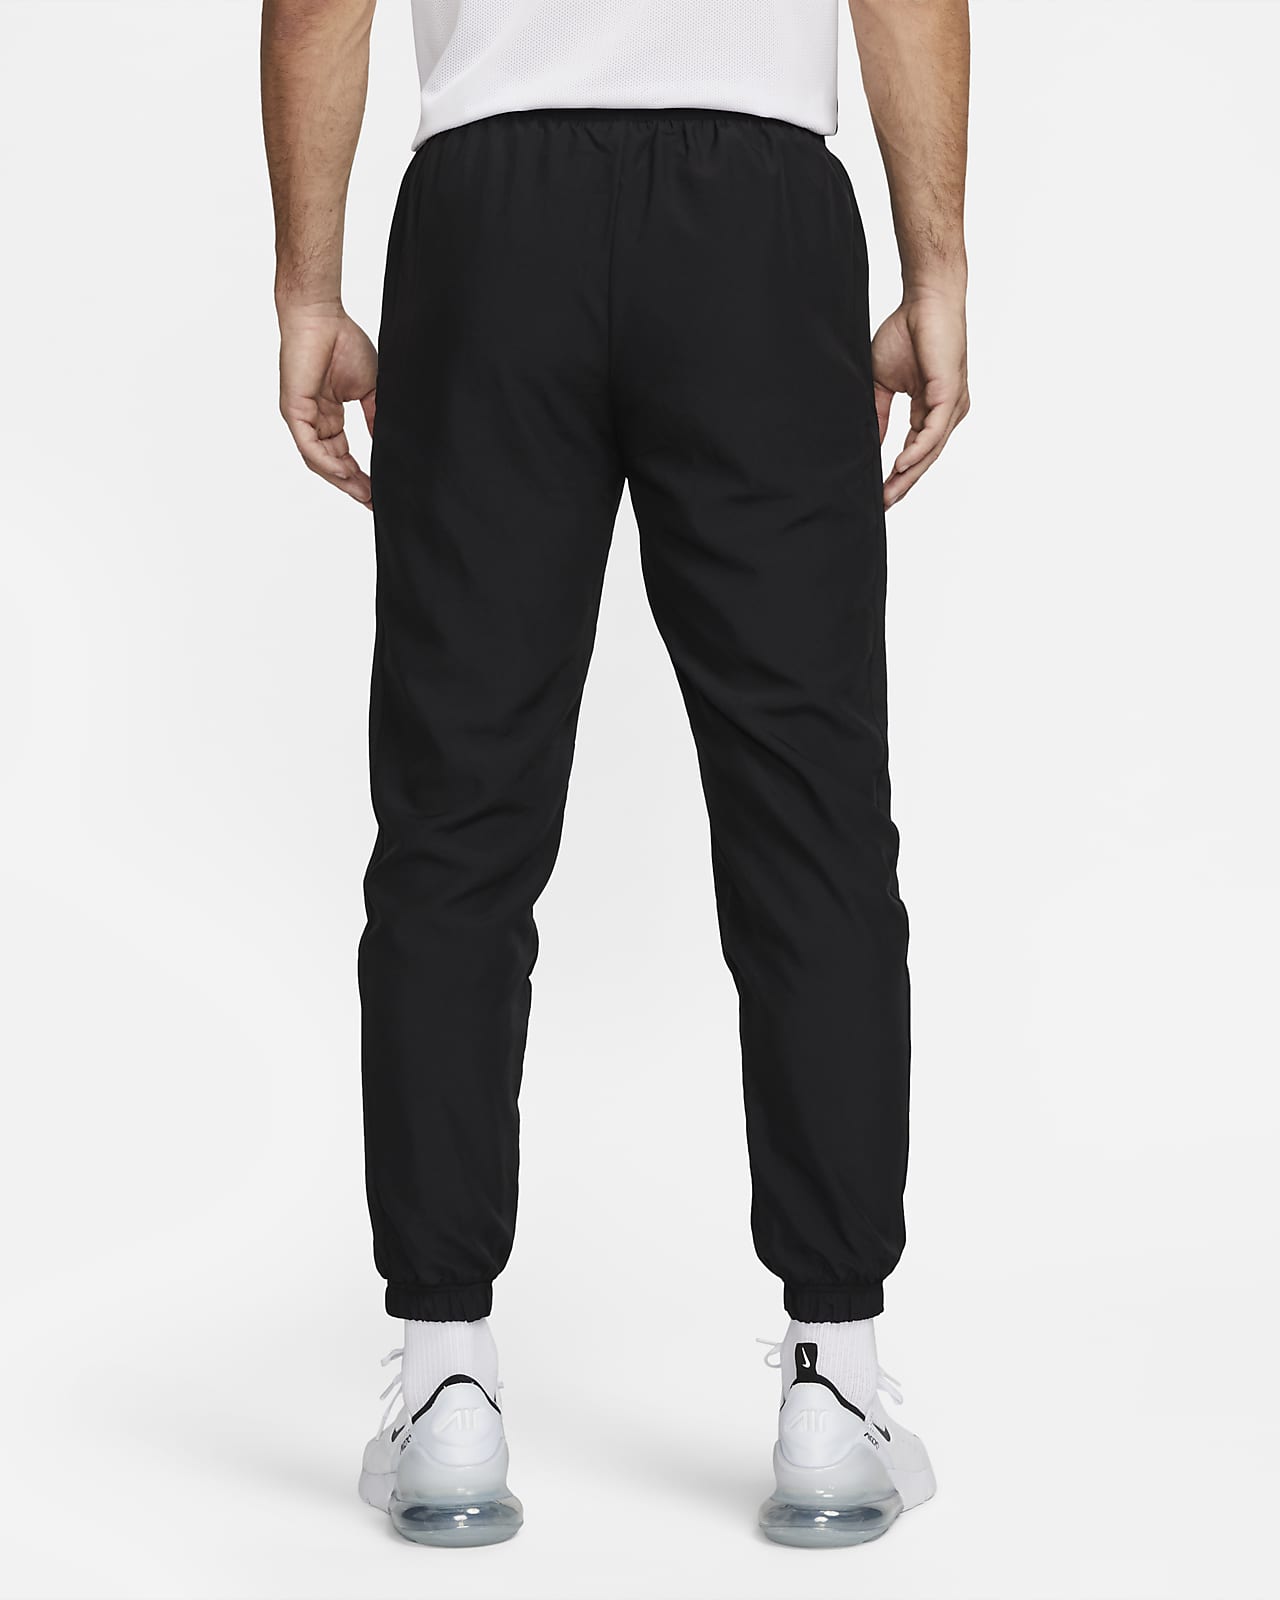  Nike Men's Dri-Fit Training Pants (US, Alpha, Medium